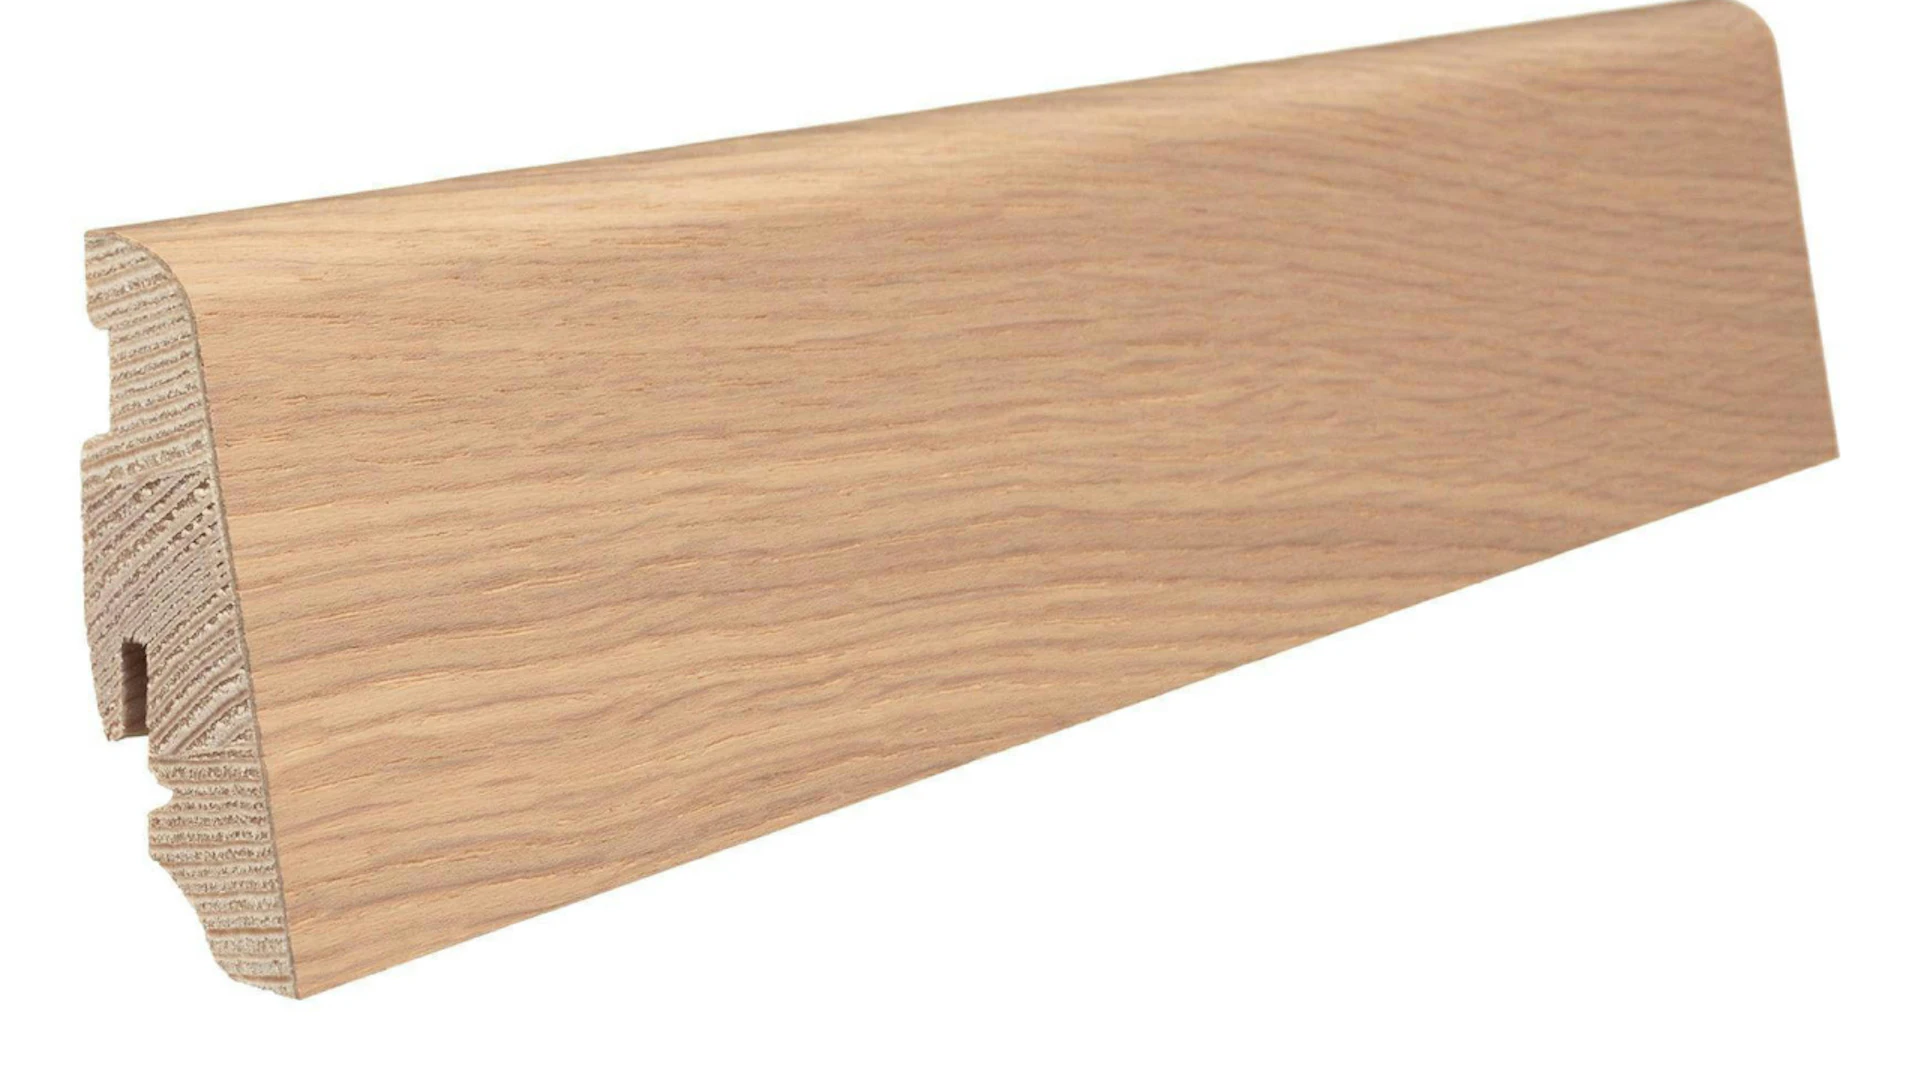 Haro skirting boards for parquet - 19 x 58 mm - white oak